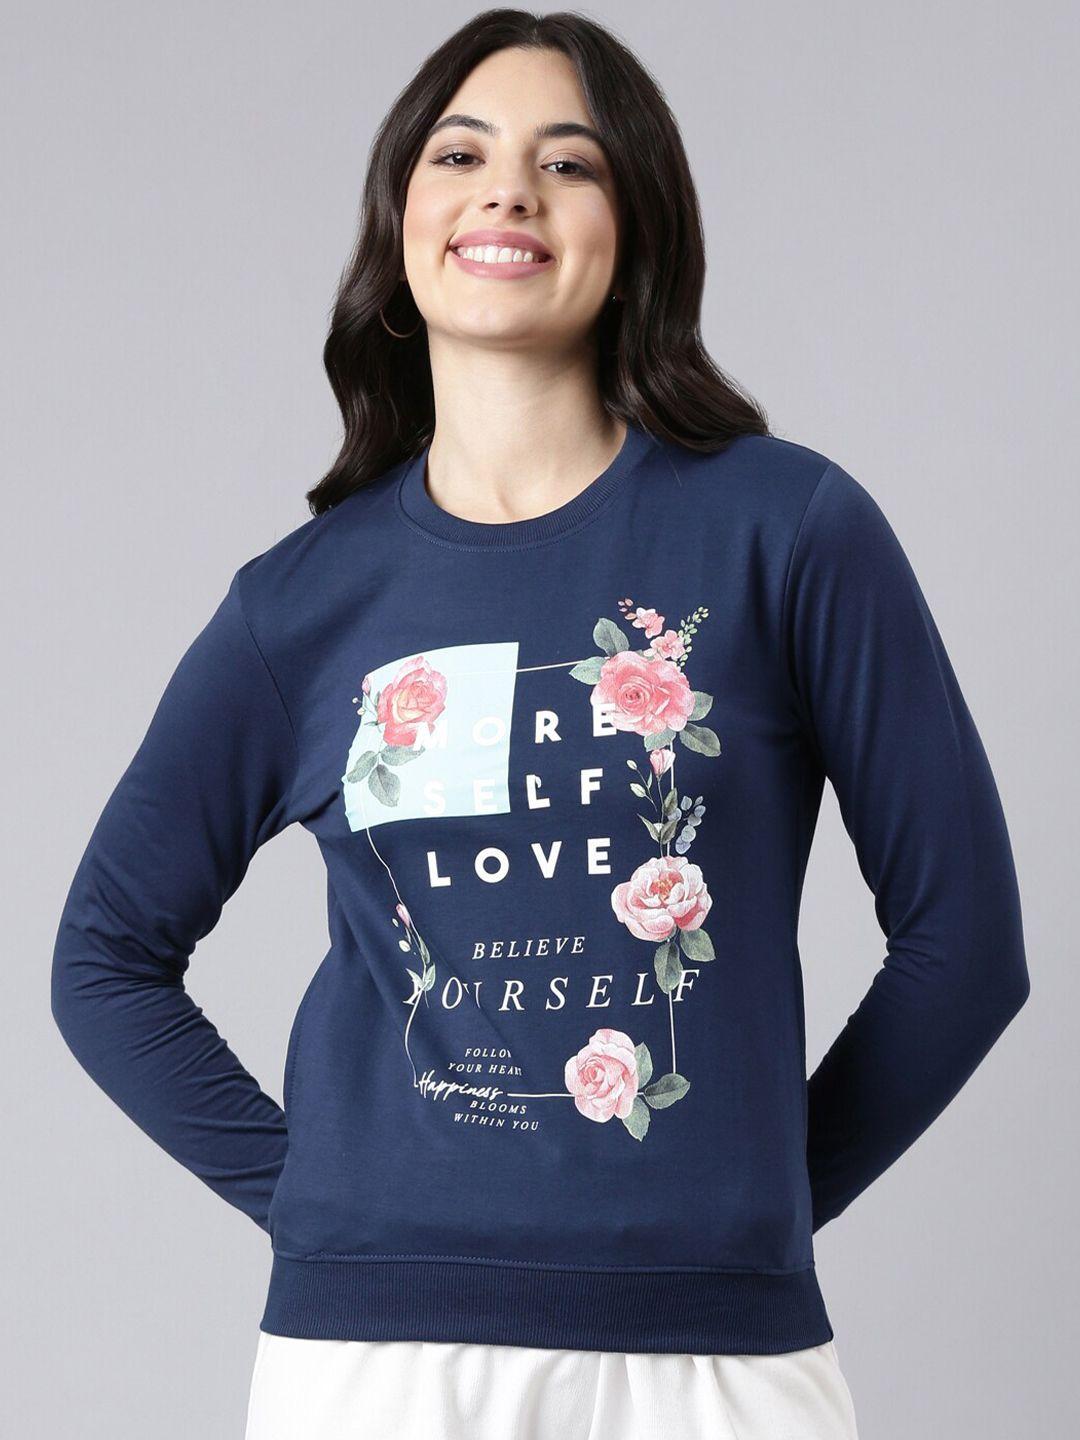 dixcy scott slimz floral printed cotton sweatshirt